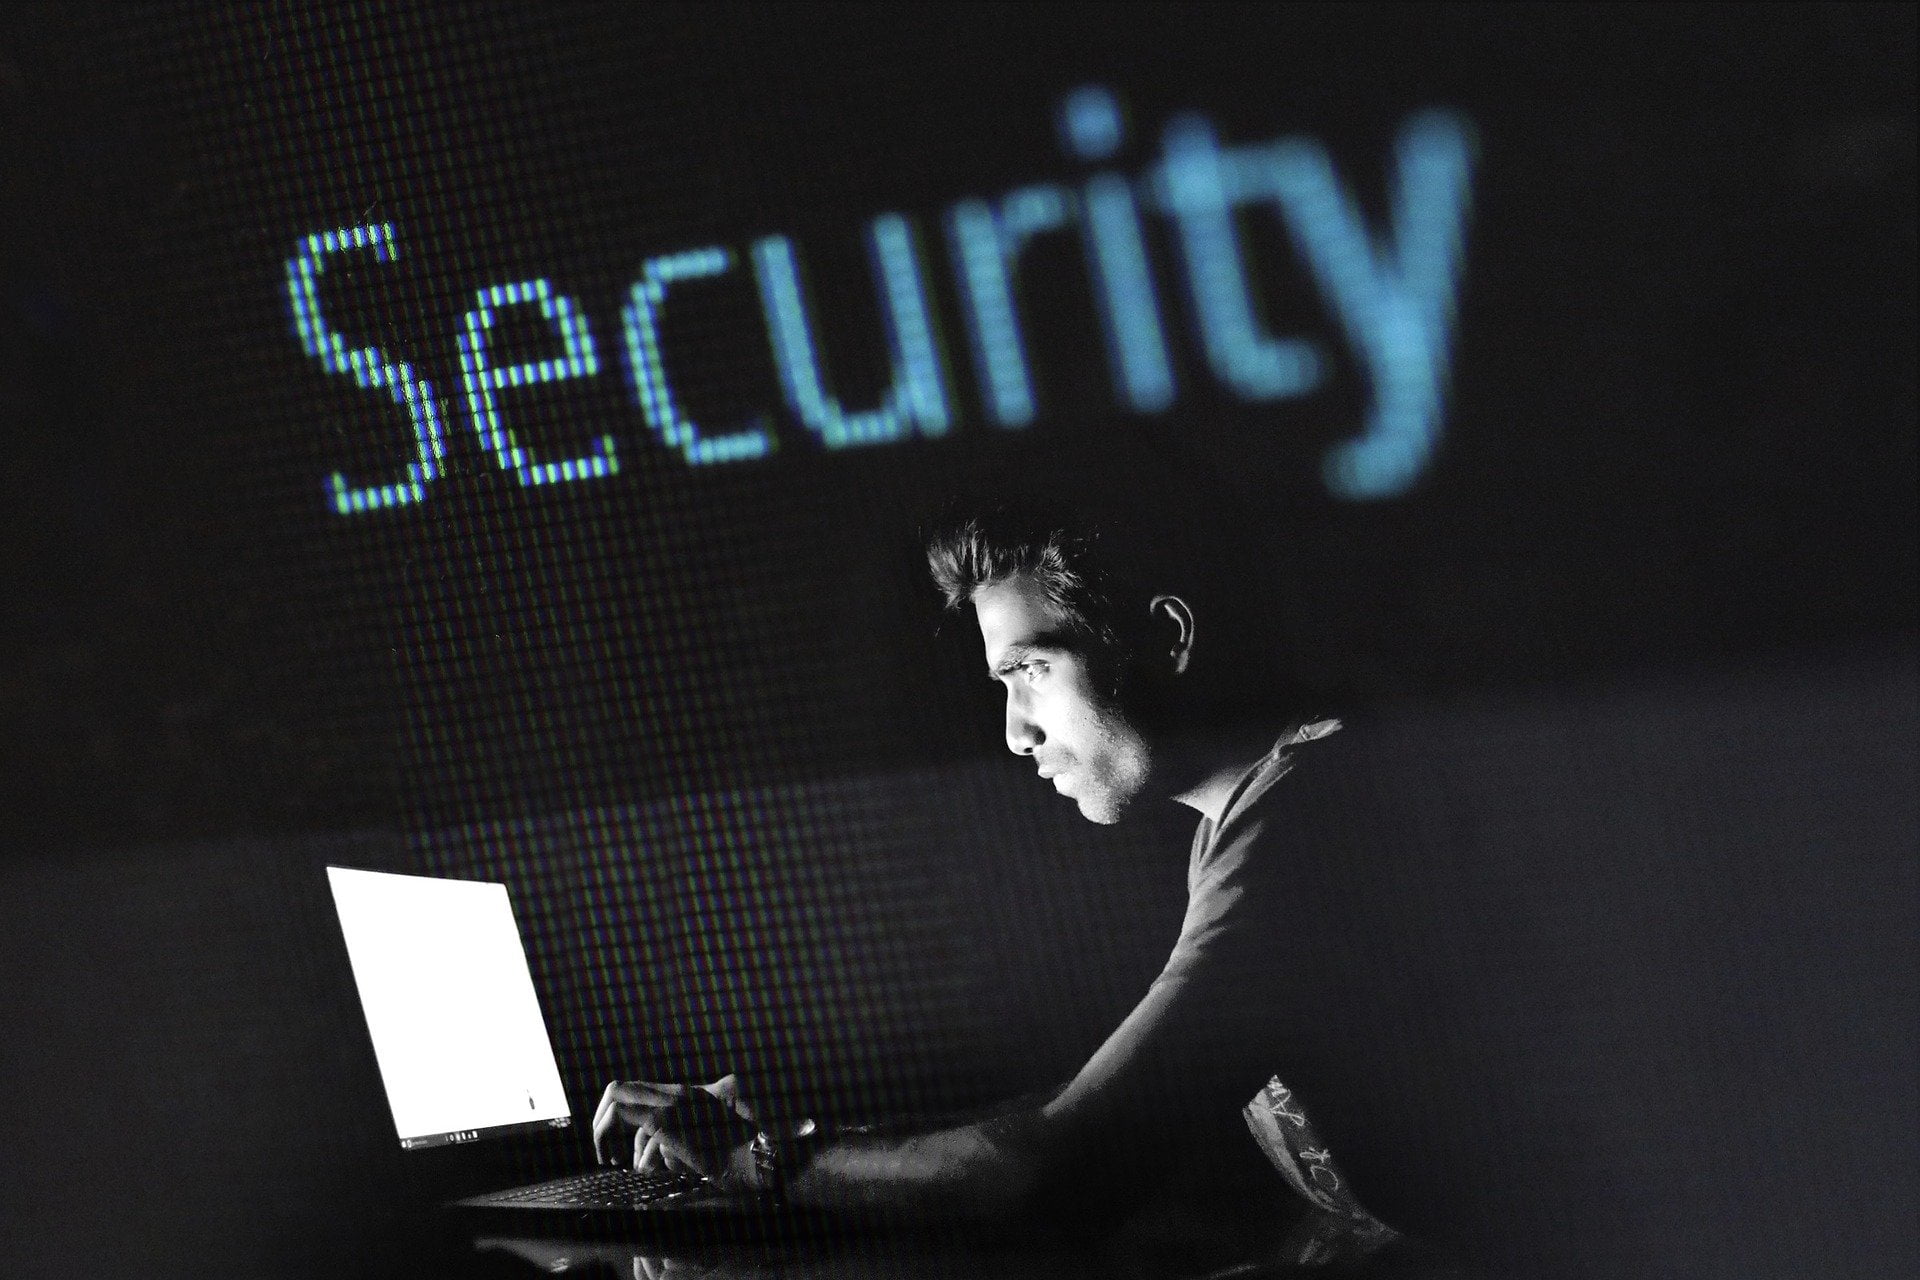 scan cyrber security threat macbook